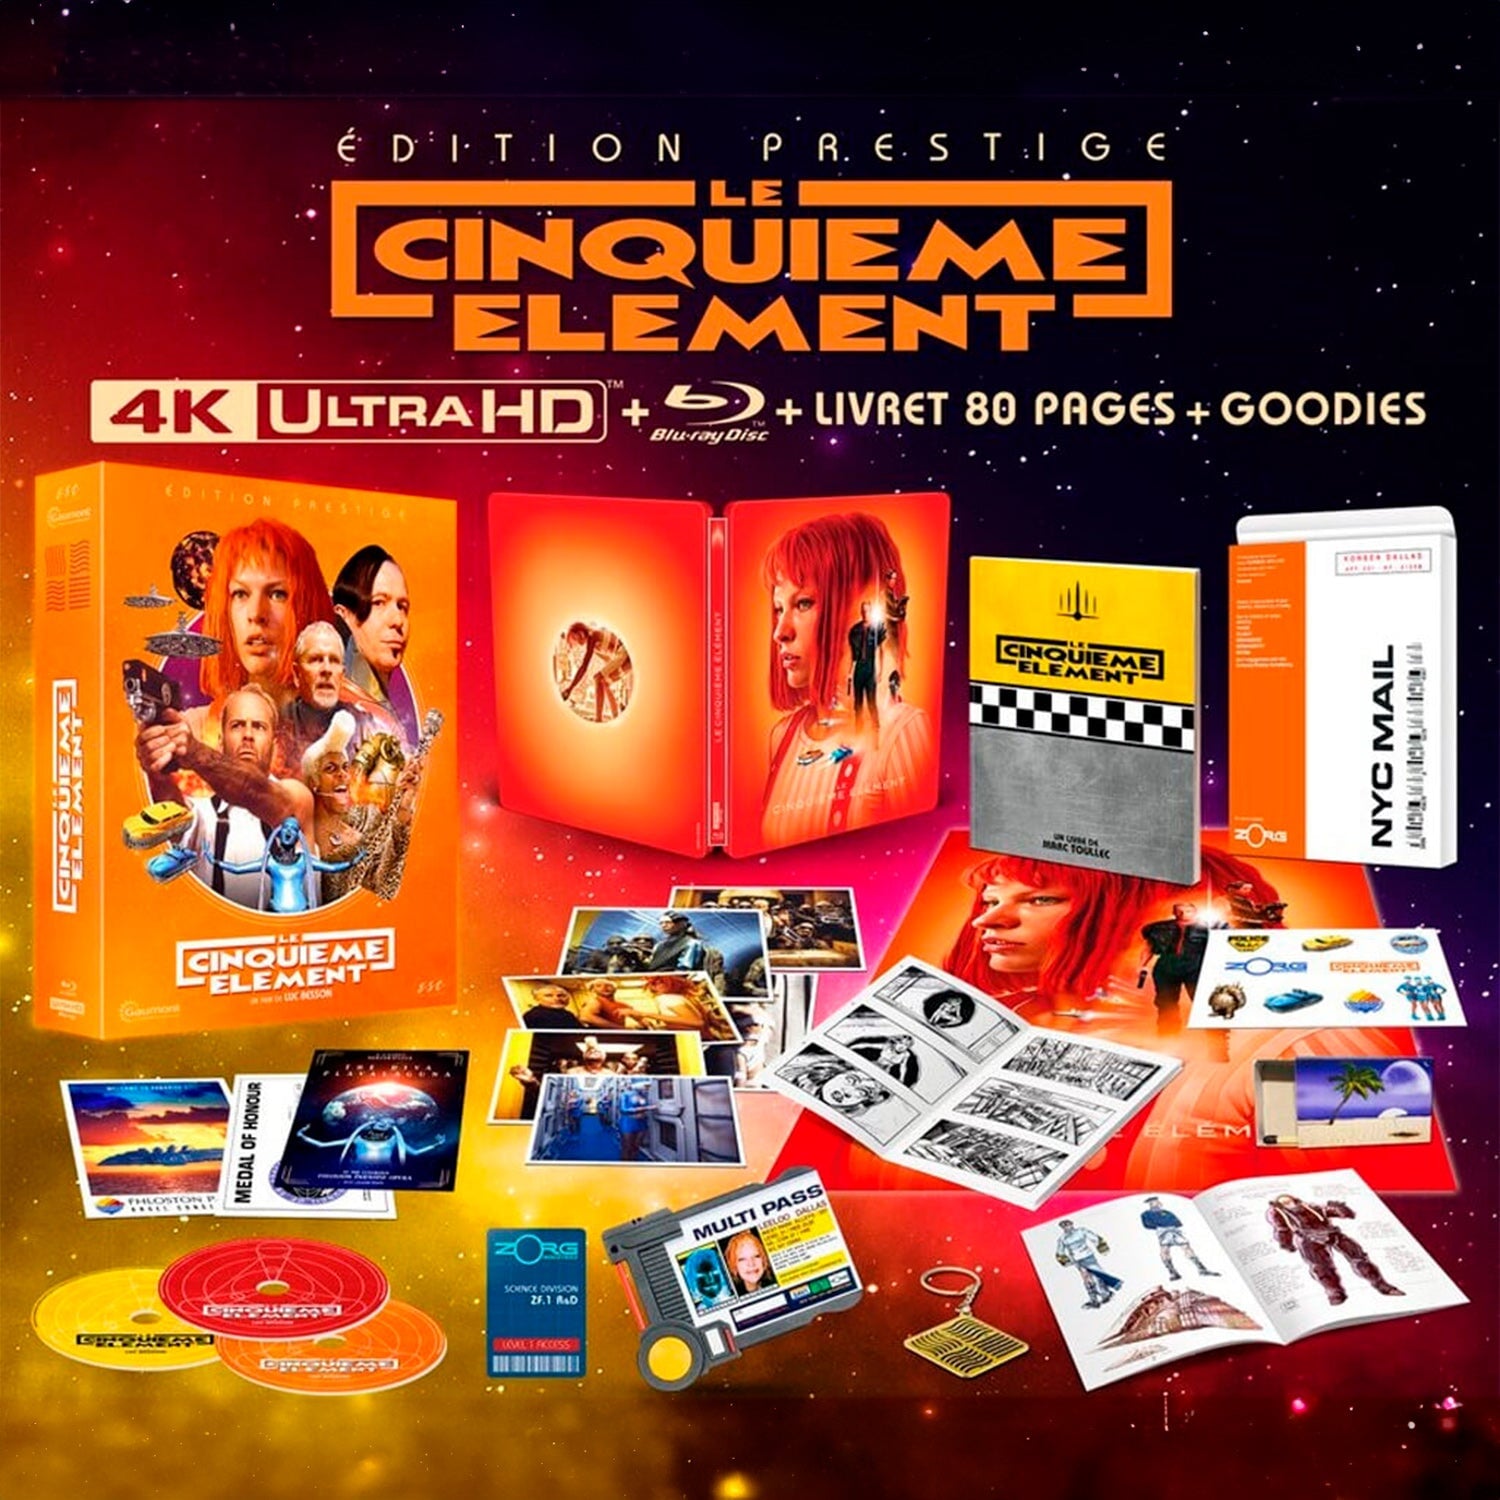 Пятый элемент (англ. язык) (4K UHD + Blu-ray + DVD) Limited Exclusive Prestige Edition Steelbook